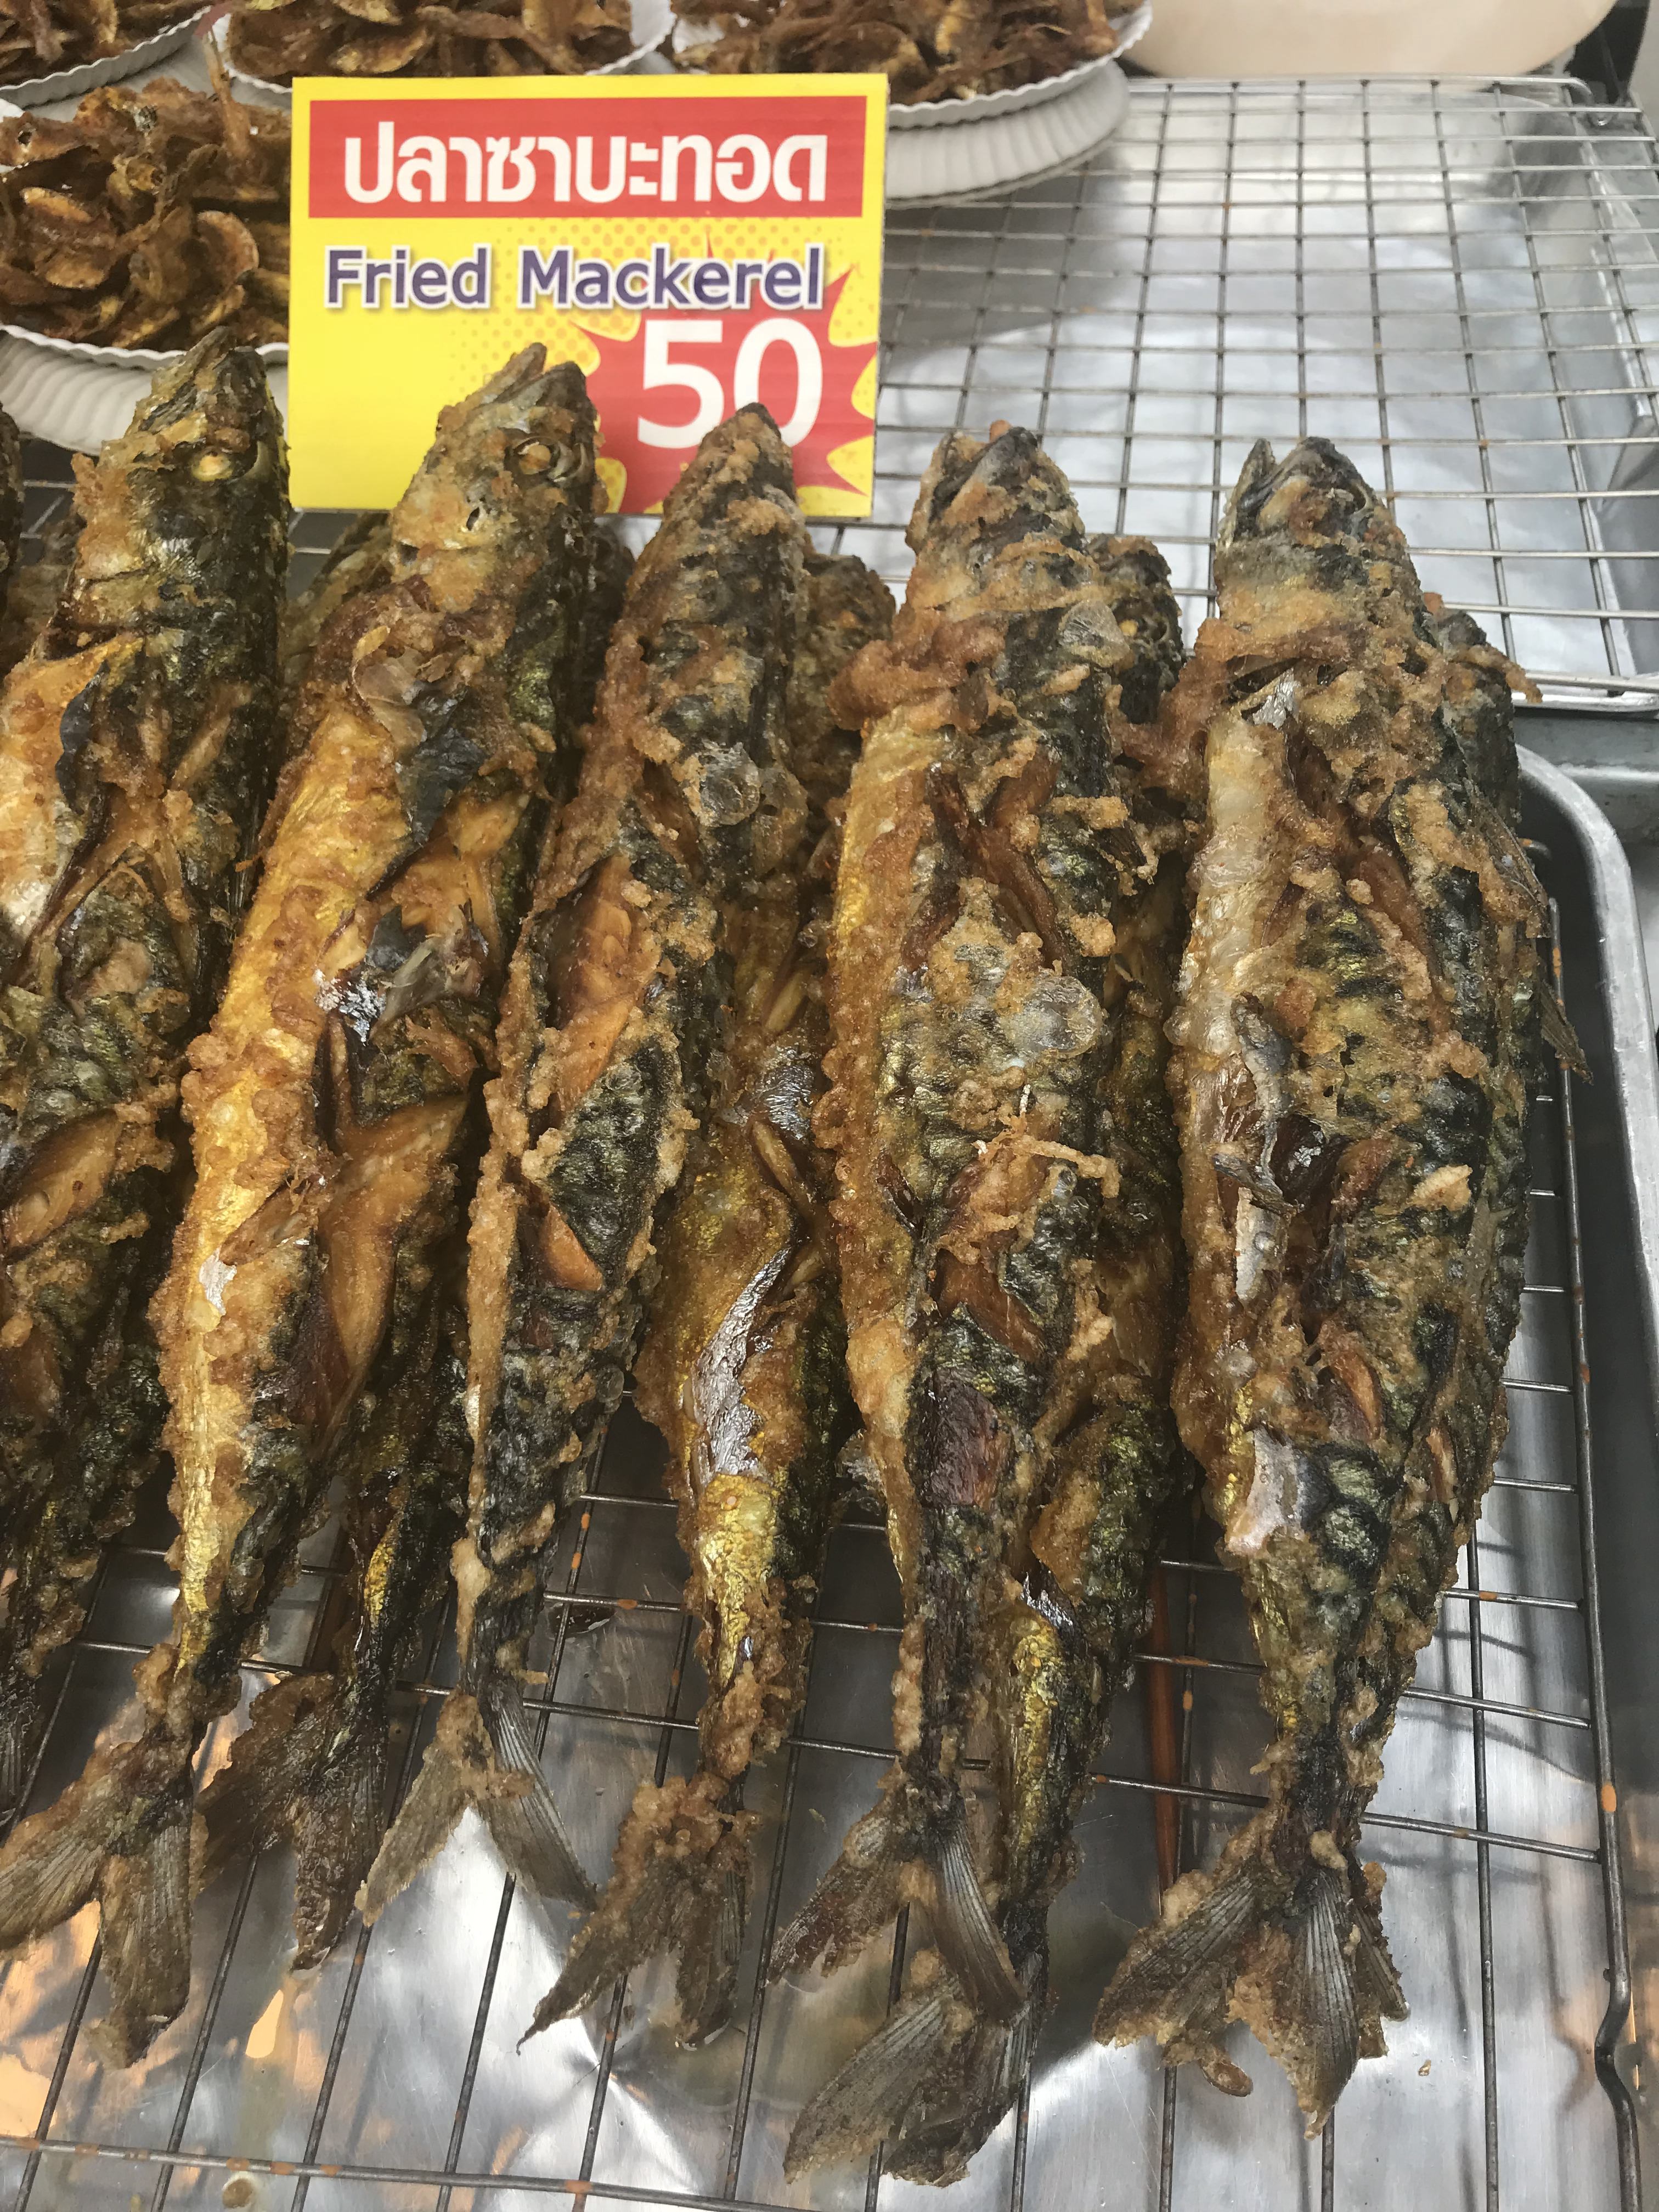 Fried Mackerel at a Street Food Market